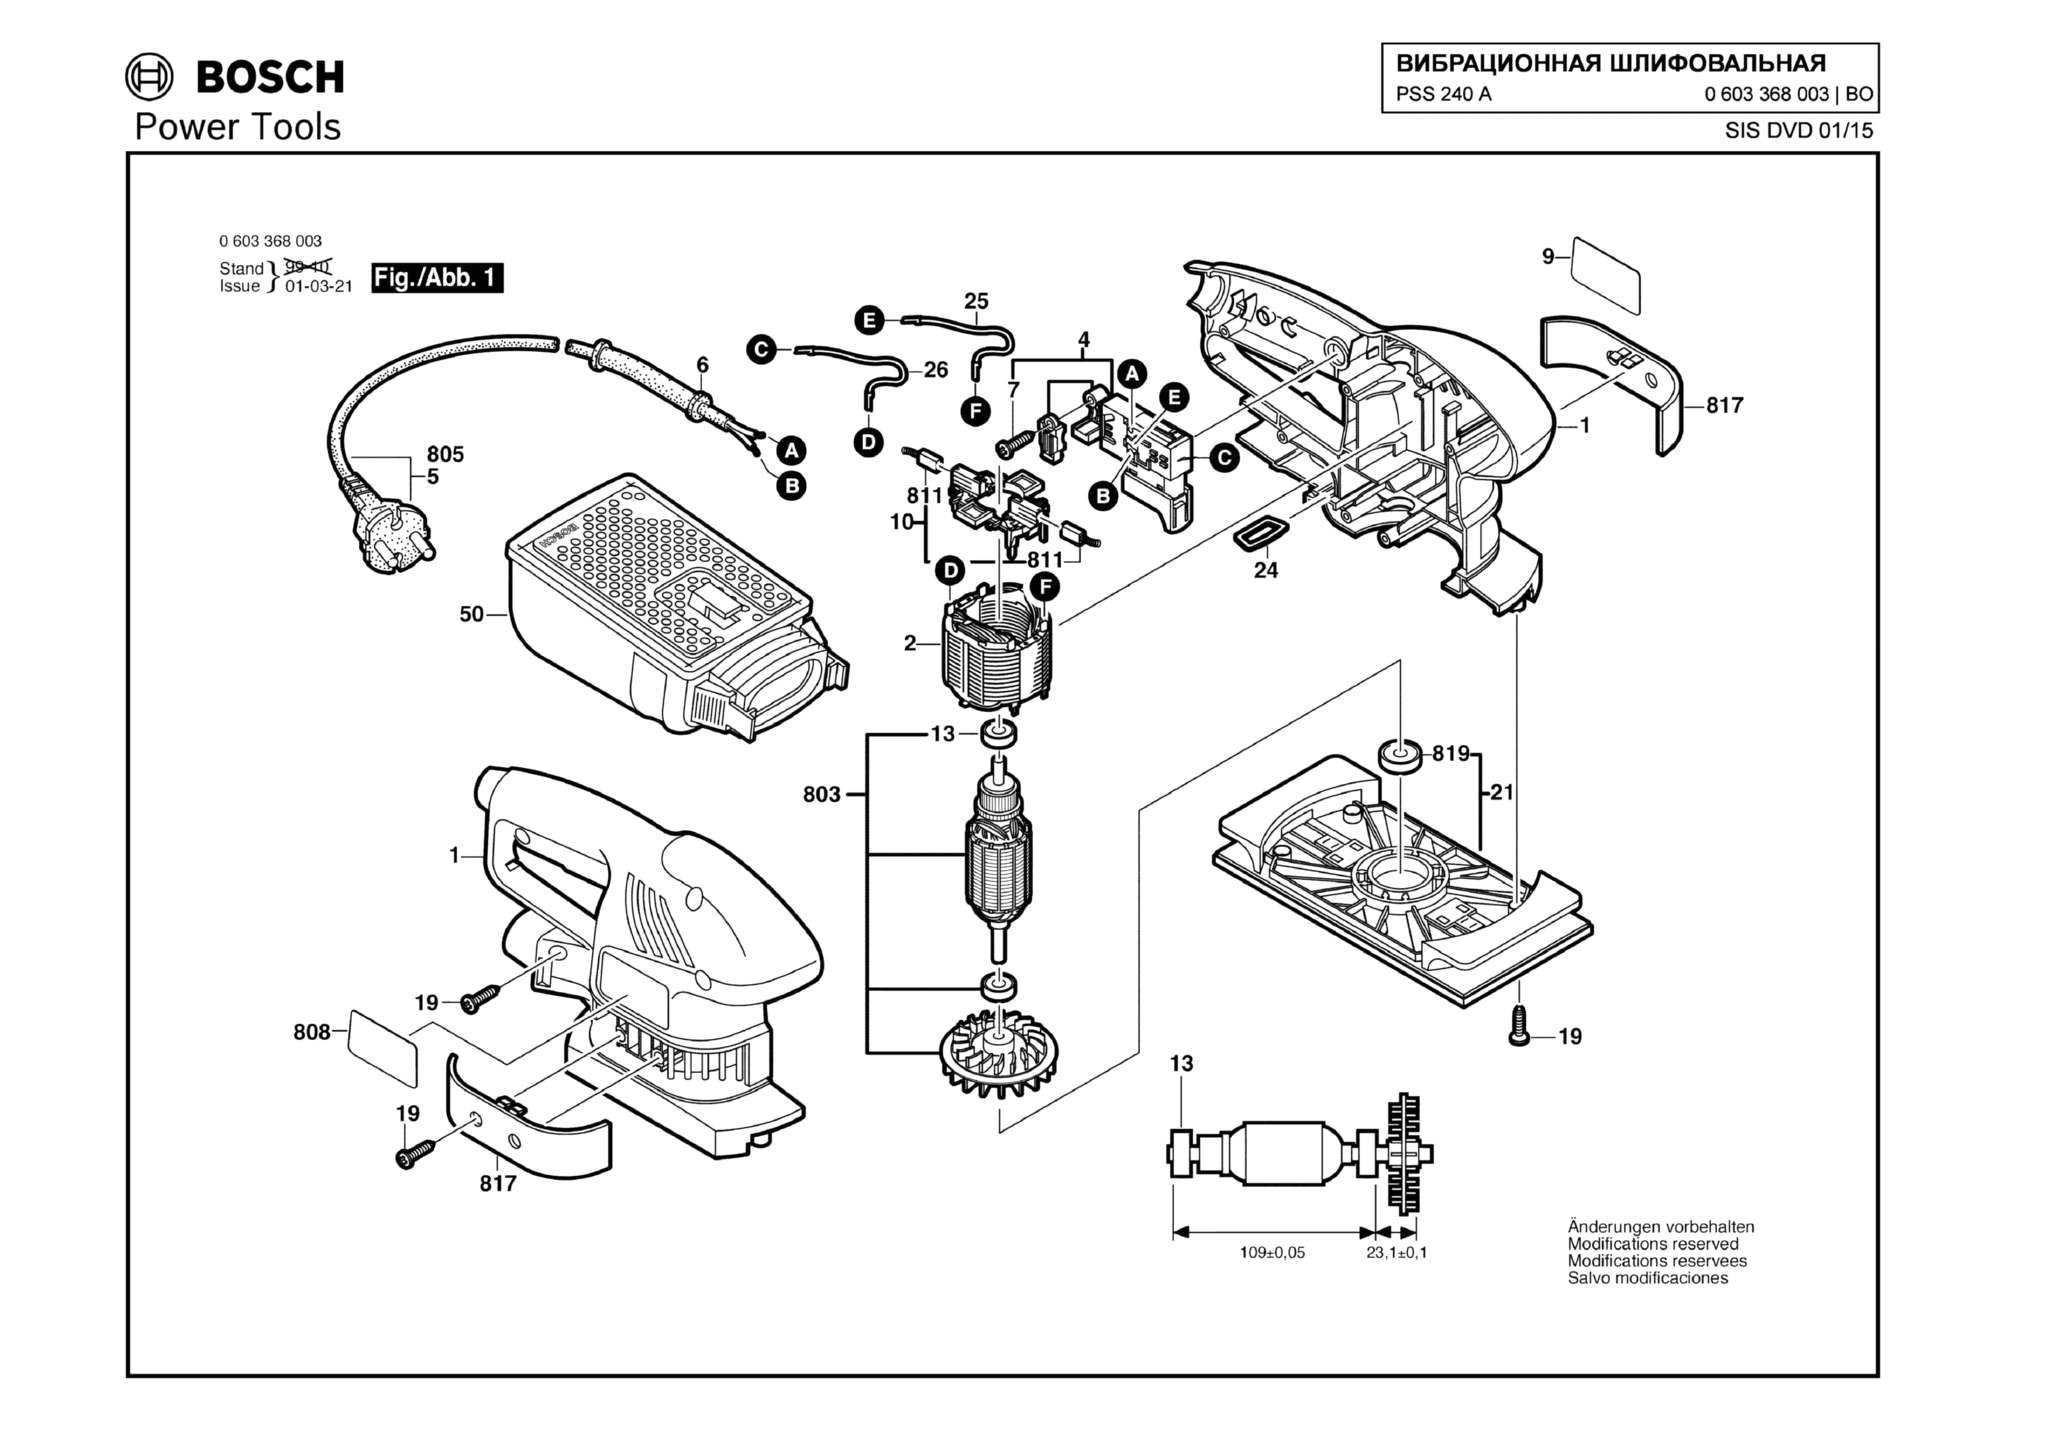 Запчасти, схема и деталировка Bosch PSS 240 A (ТИП 0603368003)